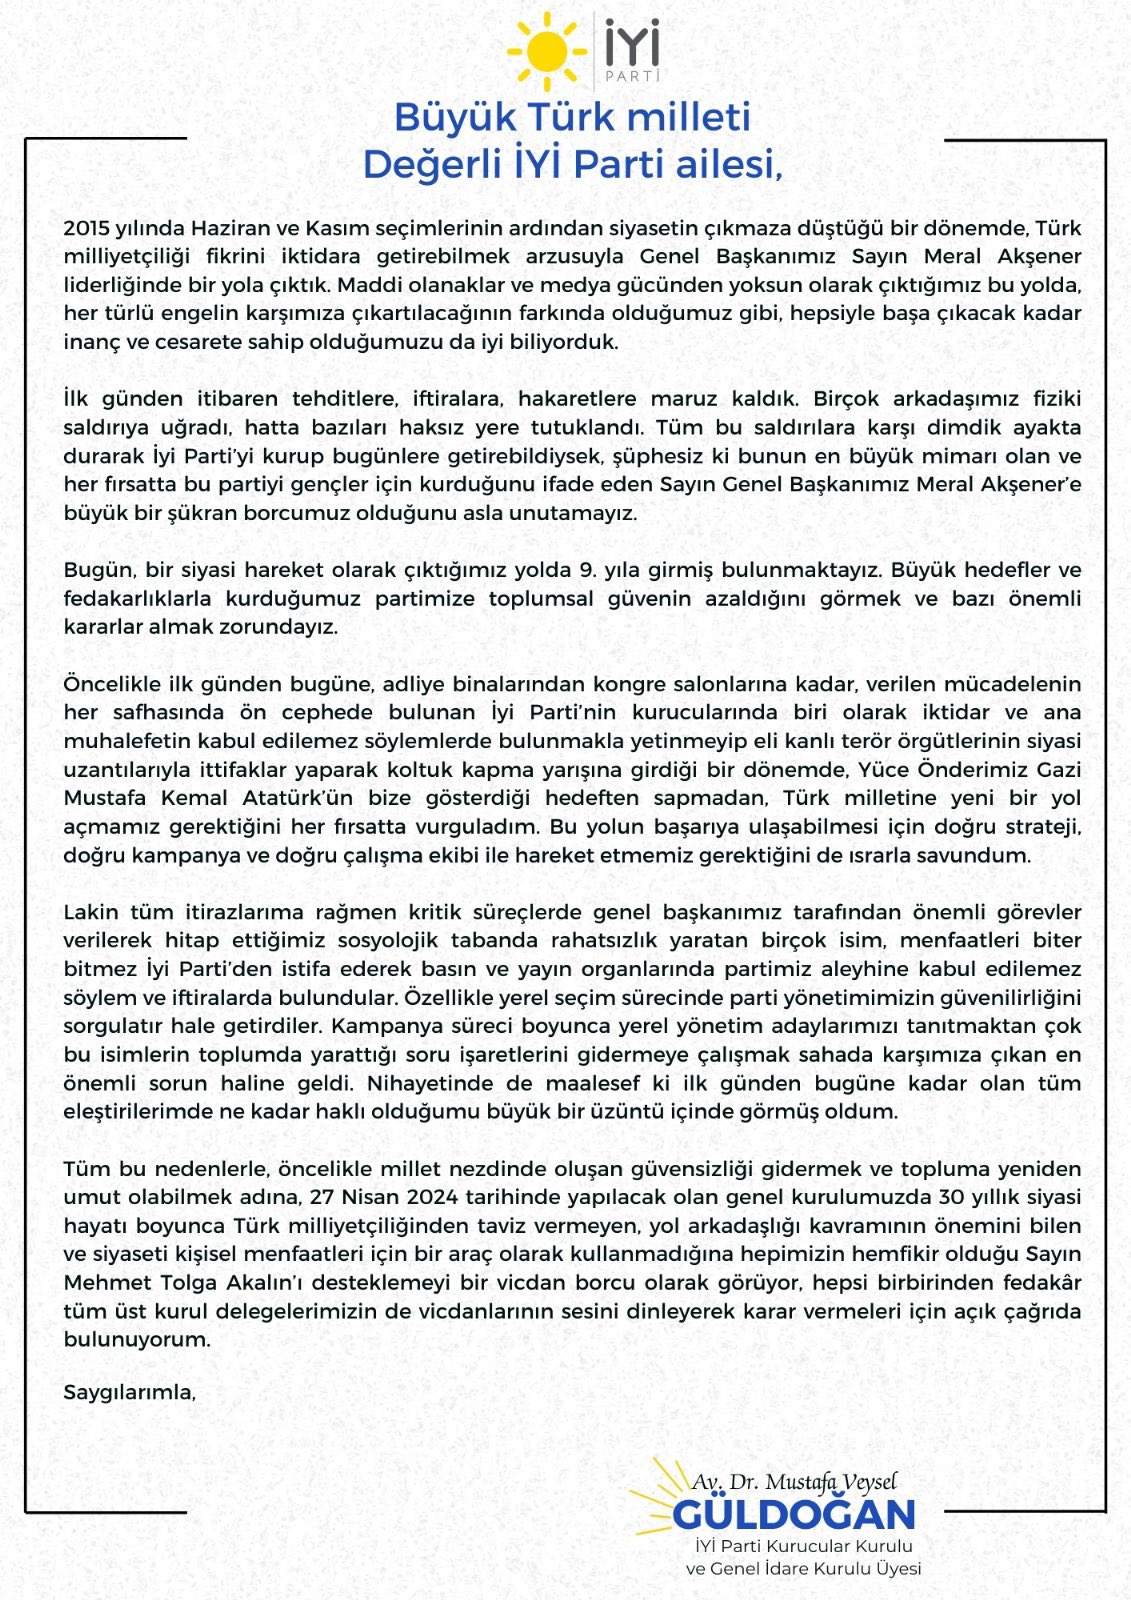 Avukat Mustafa Veysel Guldogan Kimdir Mustafa Veysel Guldogan Iyi Partide Hangi Adayi Deste 2